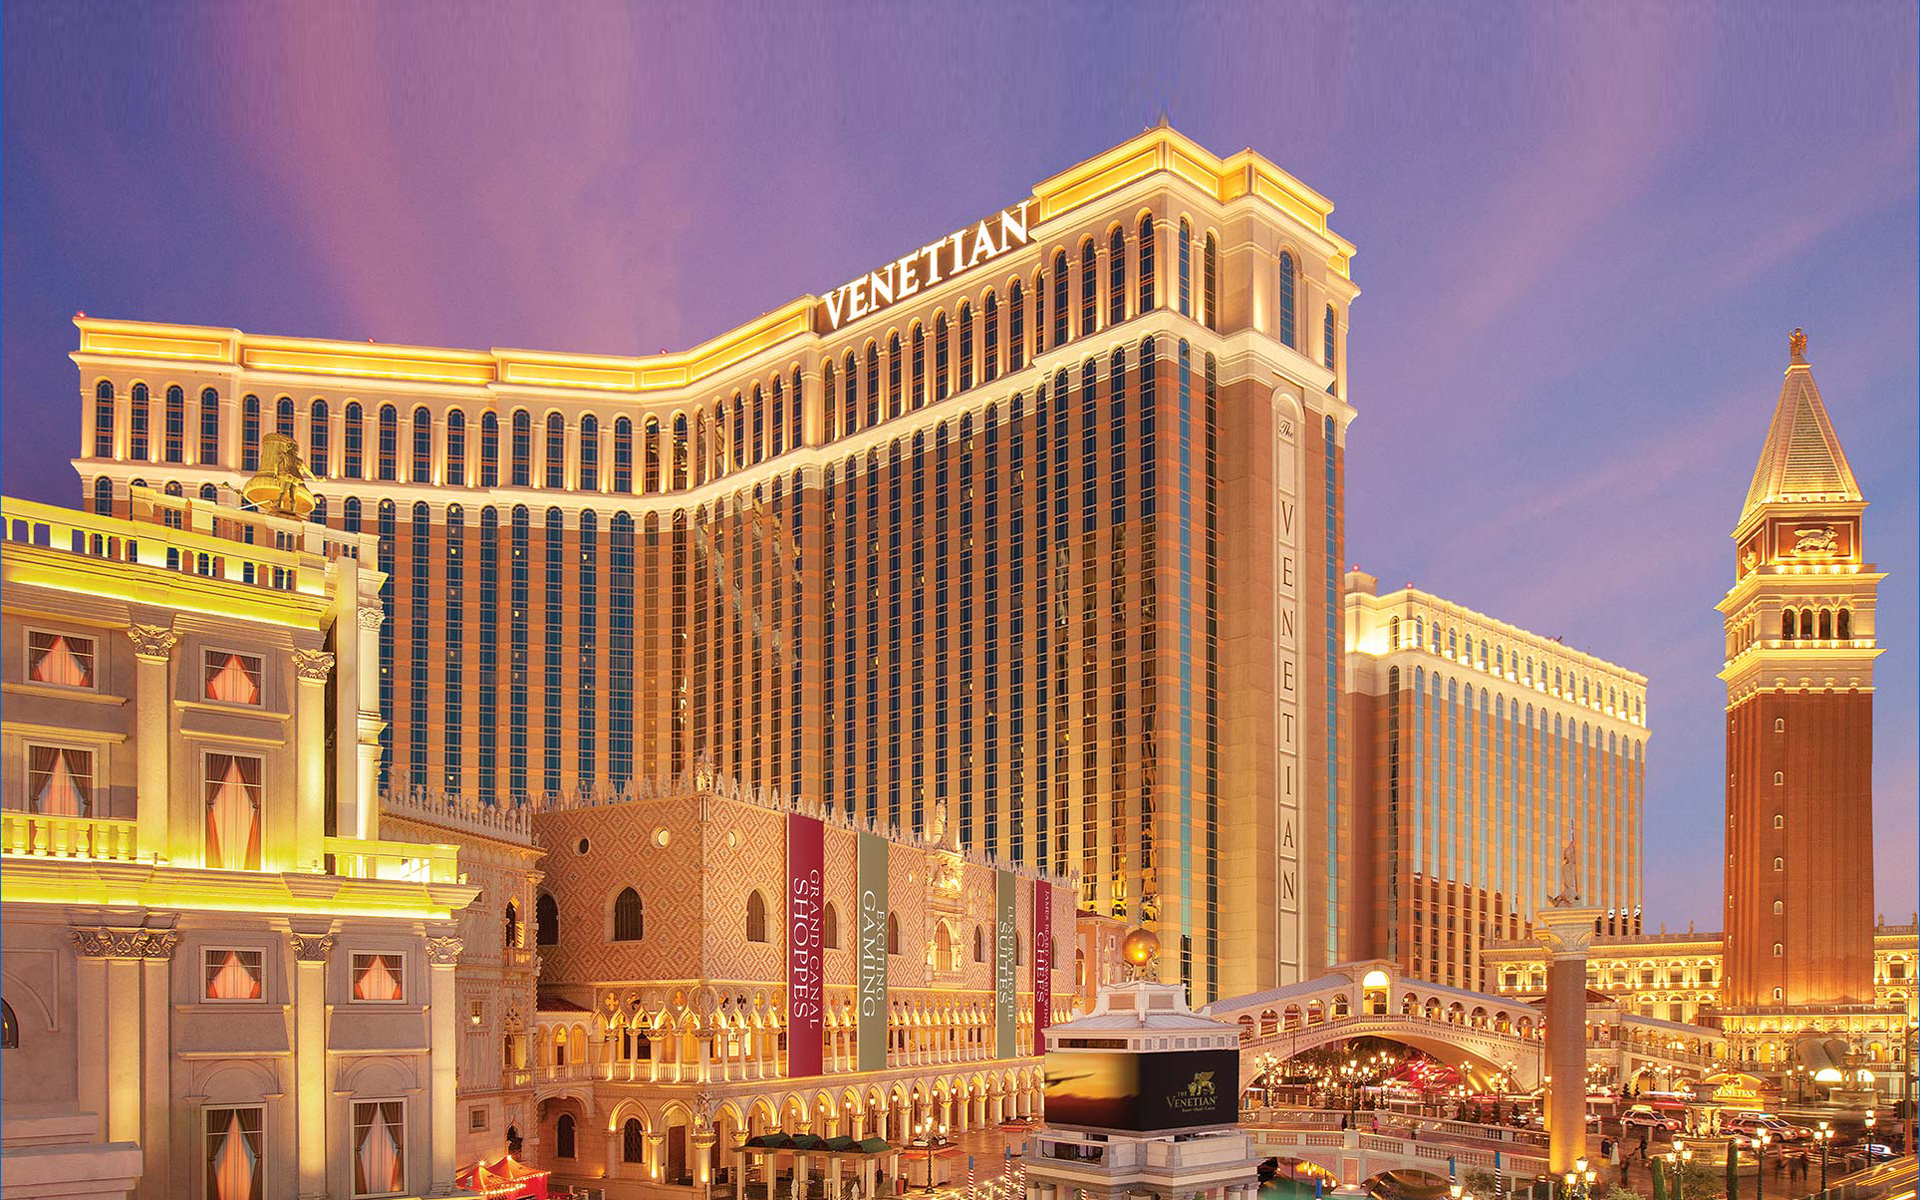 Las Vegas Nevada The Venetian Hotel Casino Wallpaper Hd For Desktop 19x10 Wallpapers13 Com